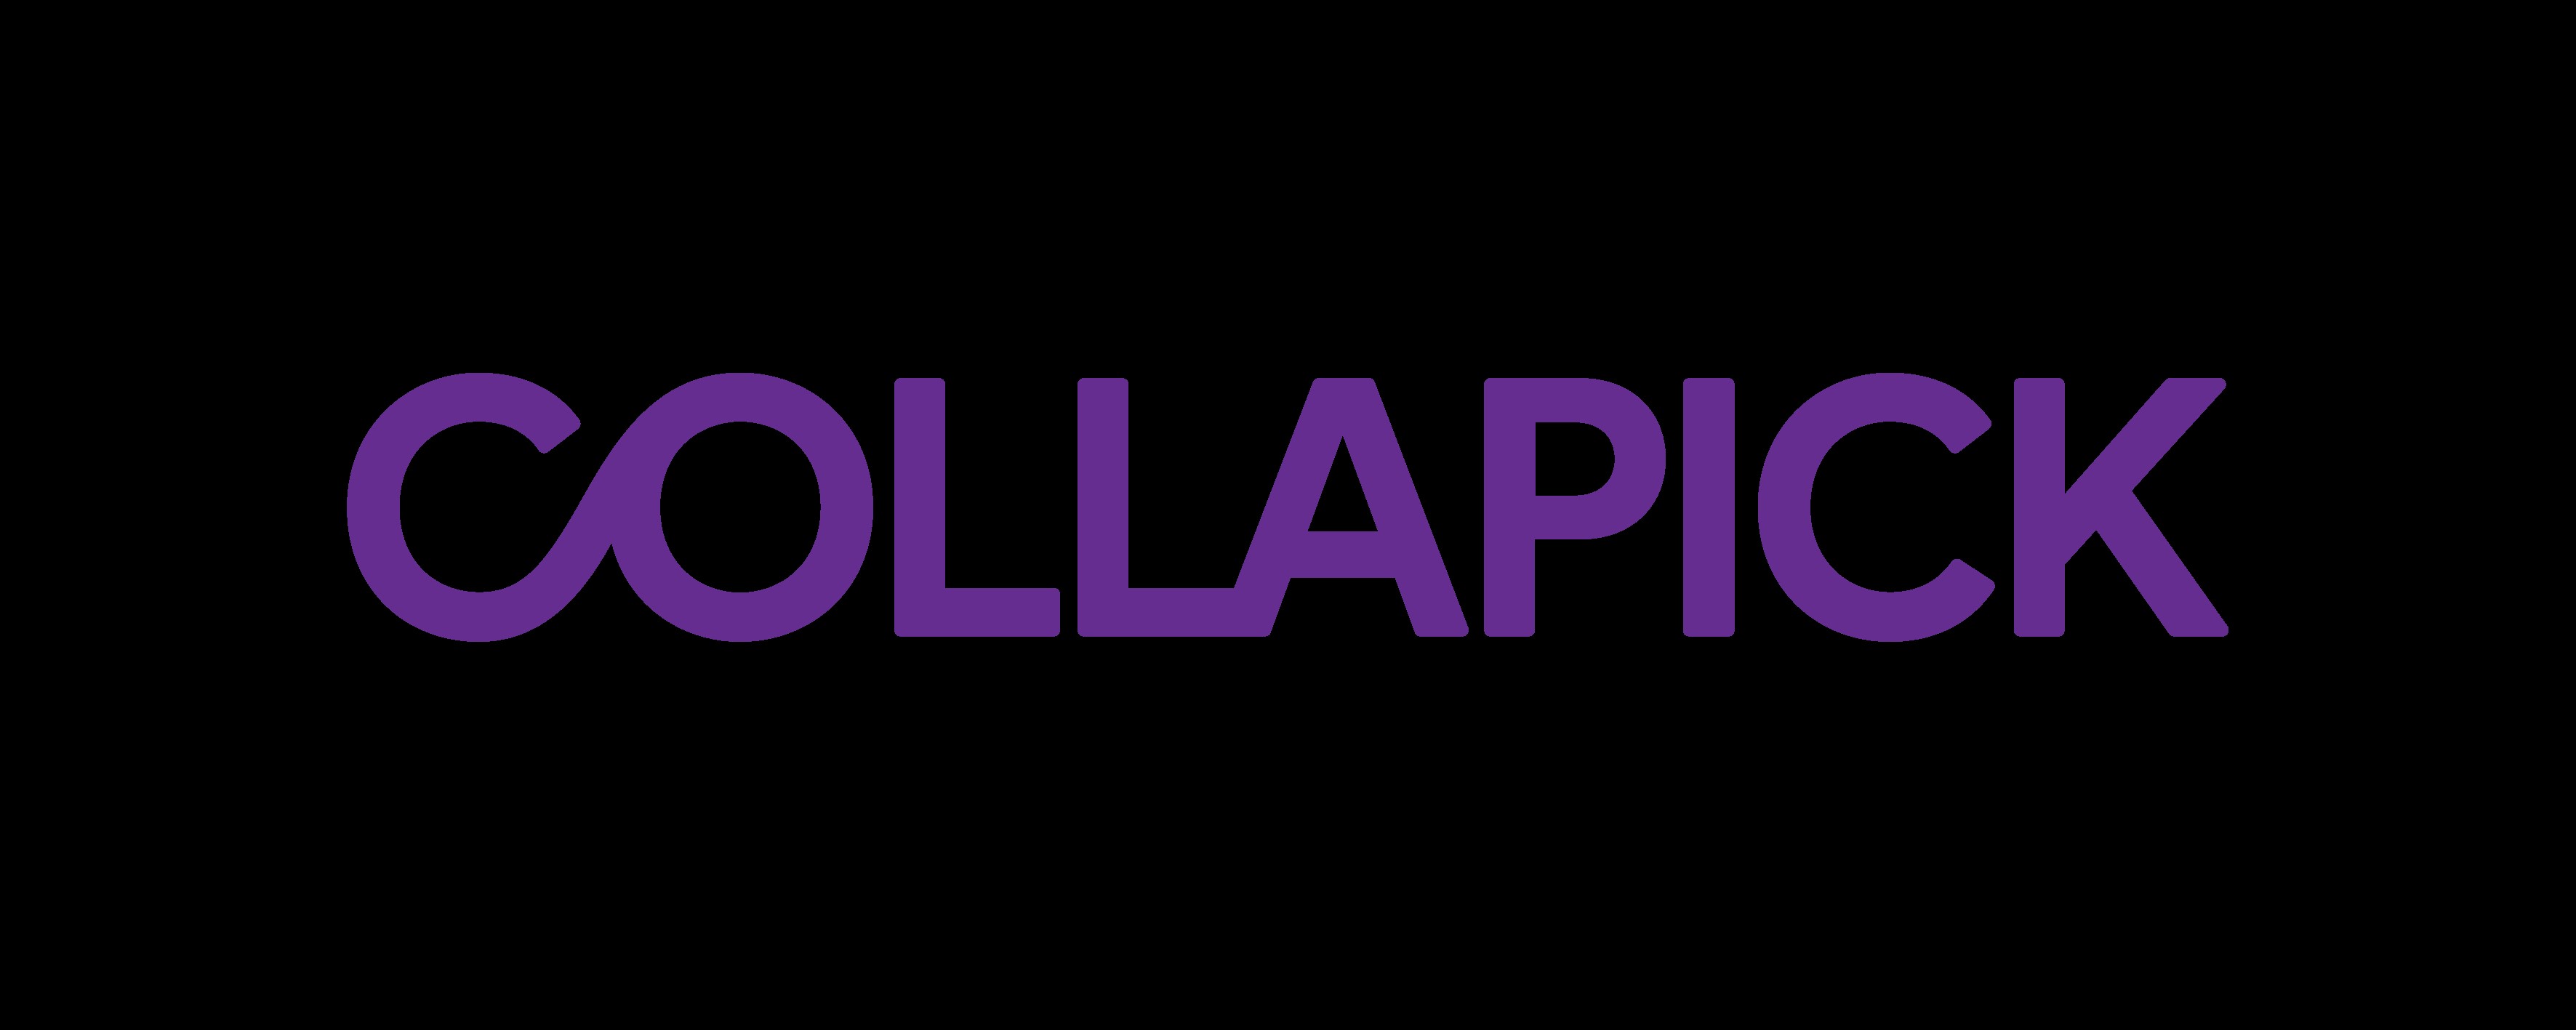 Collapick logo